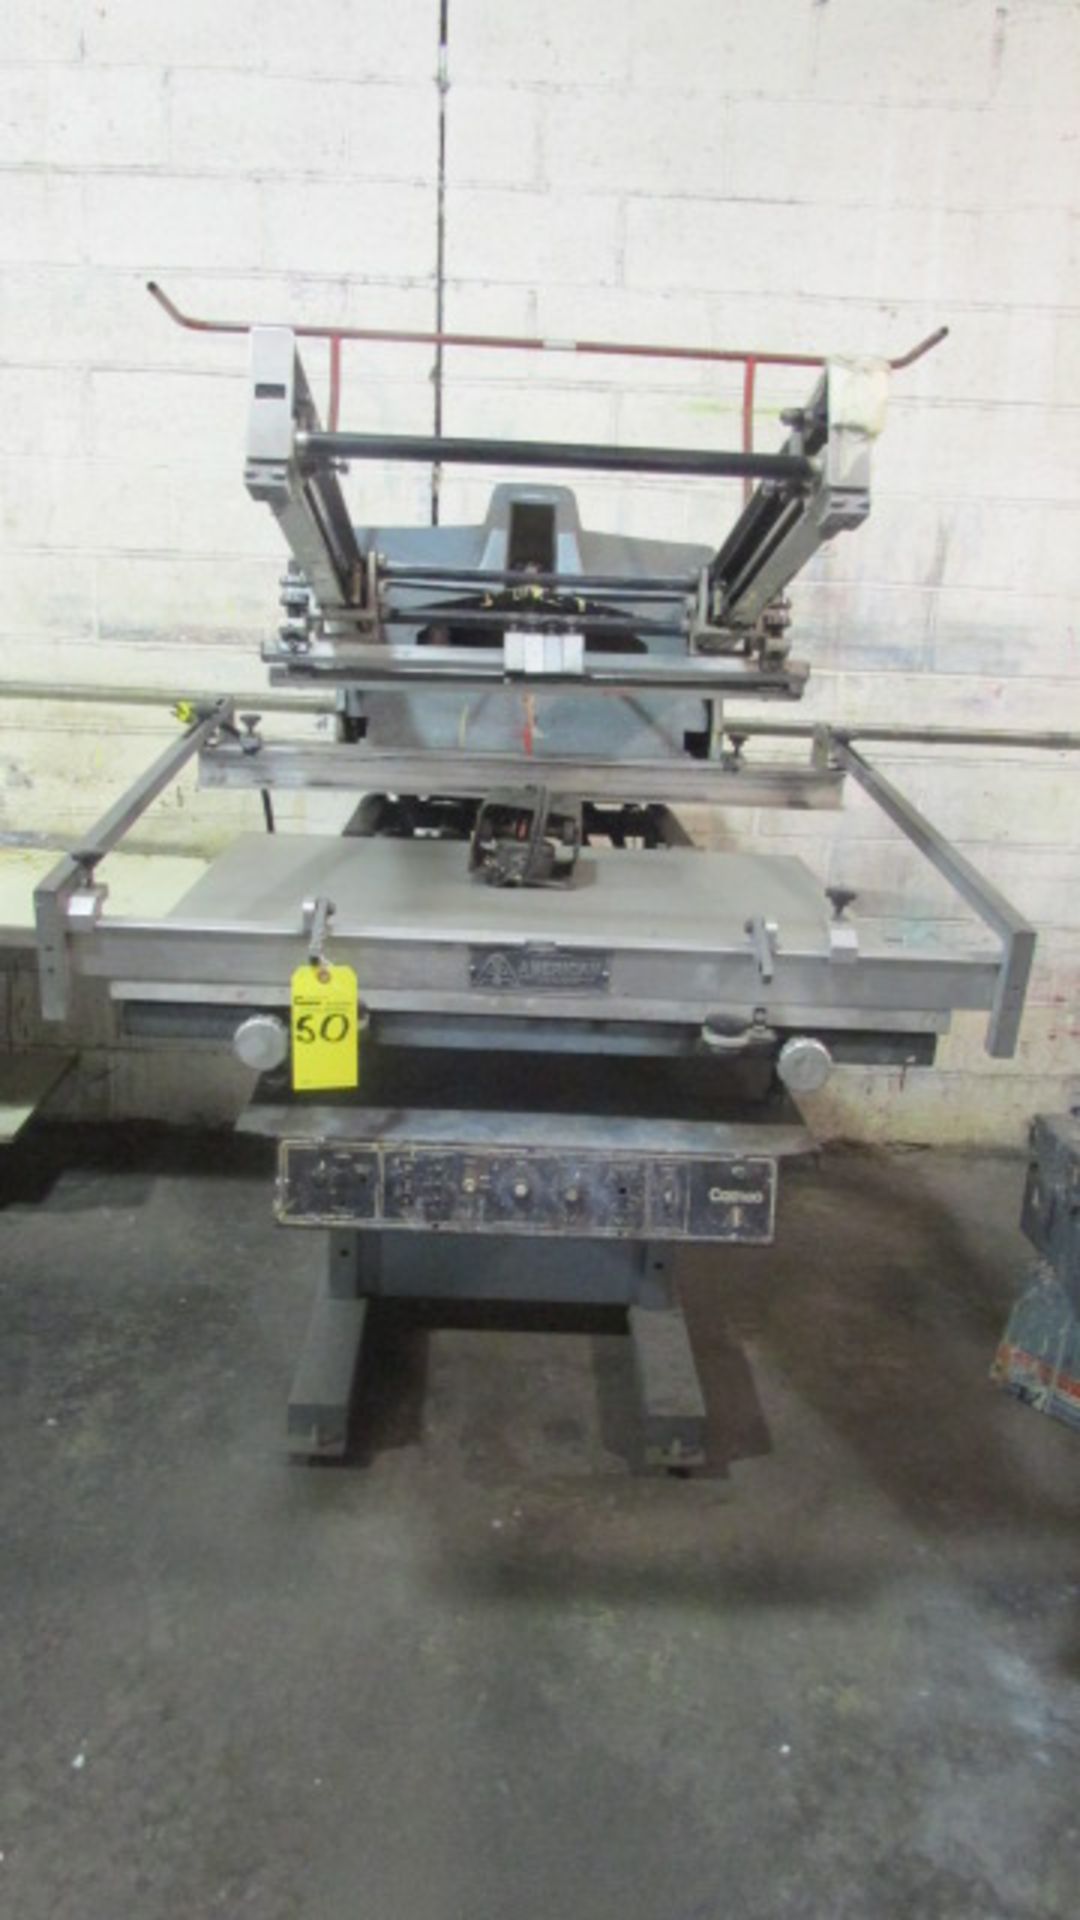 American Cameo Flatbed Press Table, 36"x32", m/n 30, s/n 907-658